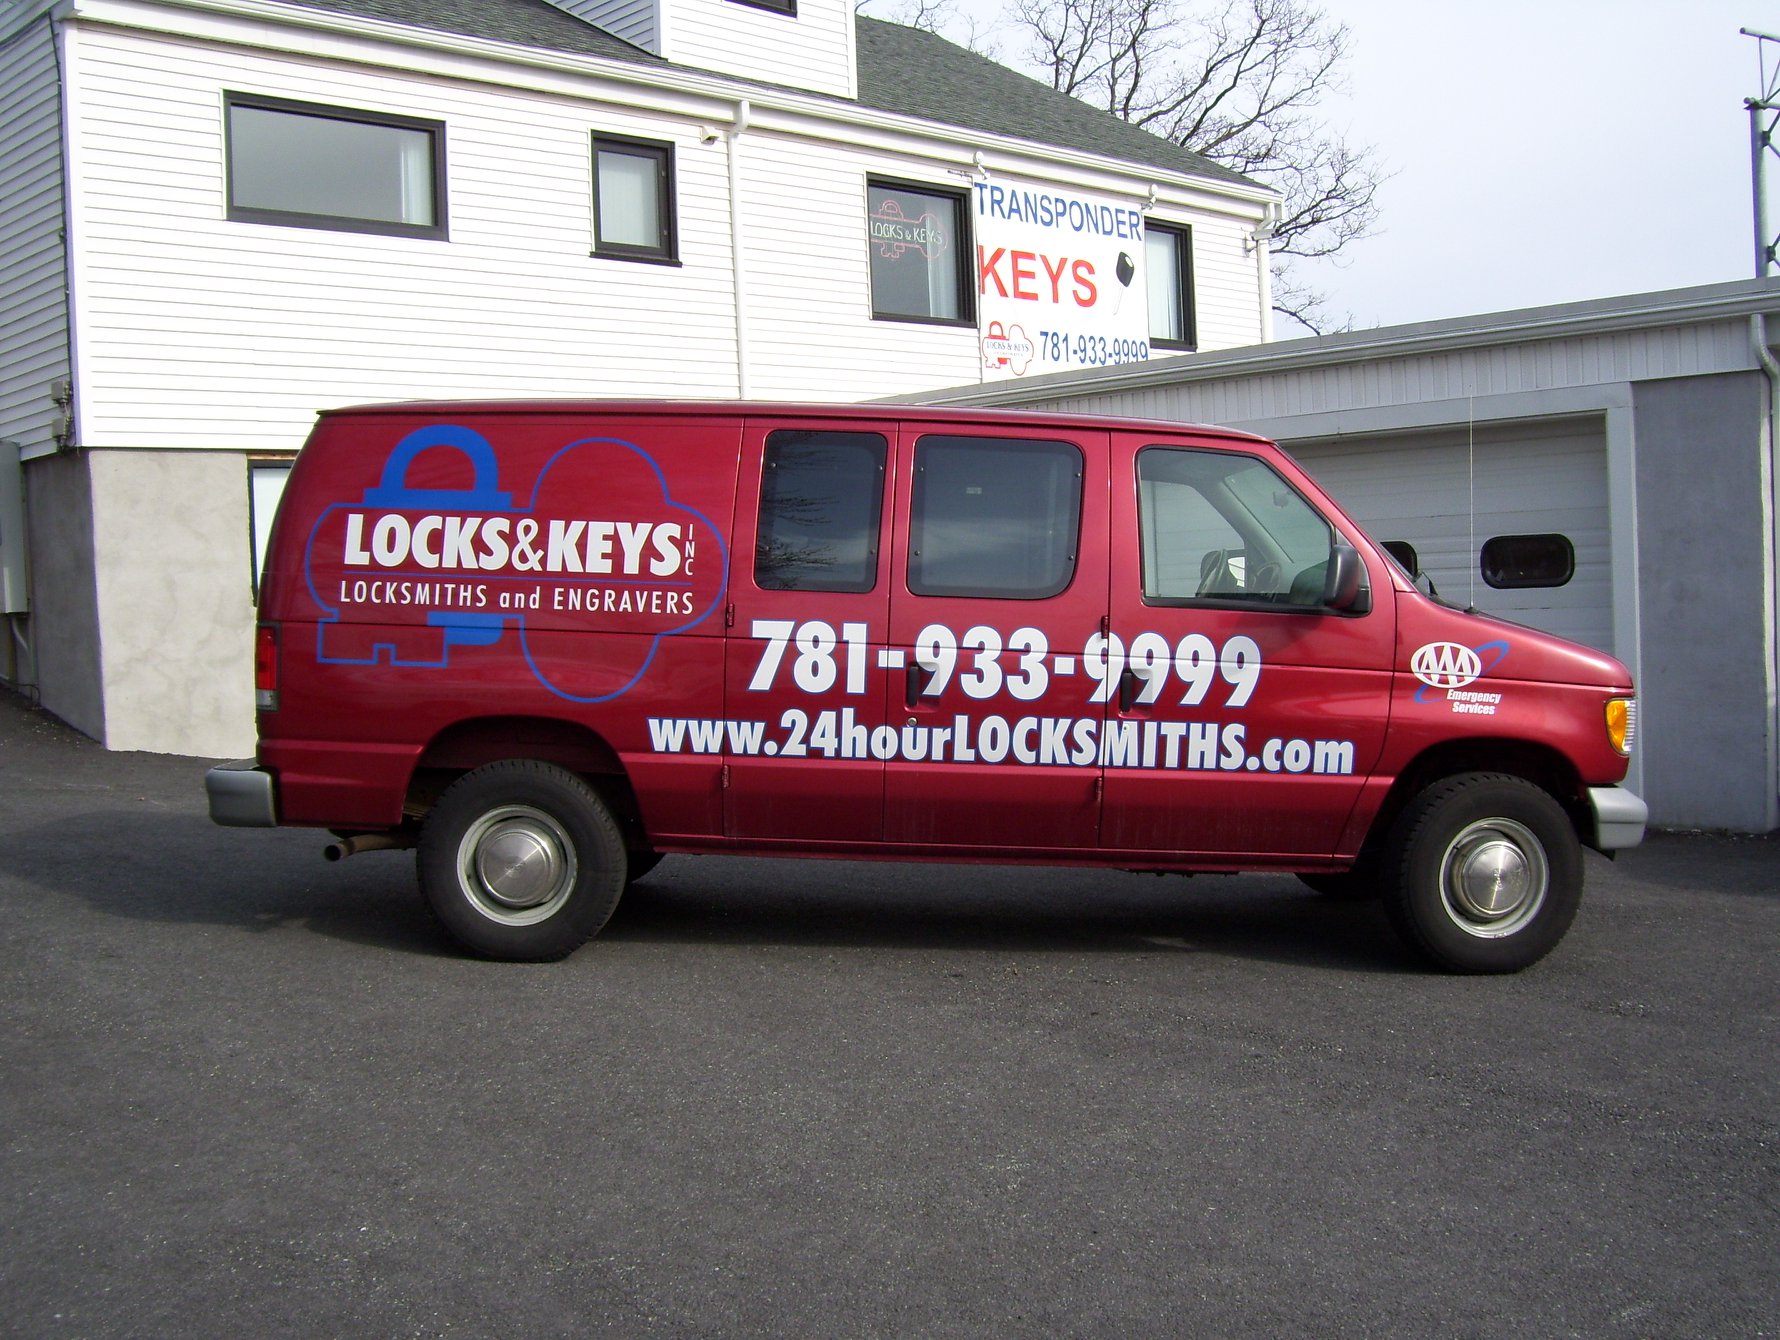 Locks & Keys Inc. - Emergency Services - Salem MA locksmith